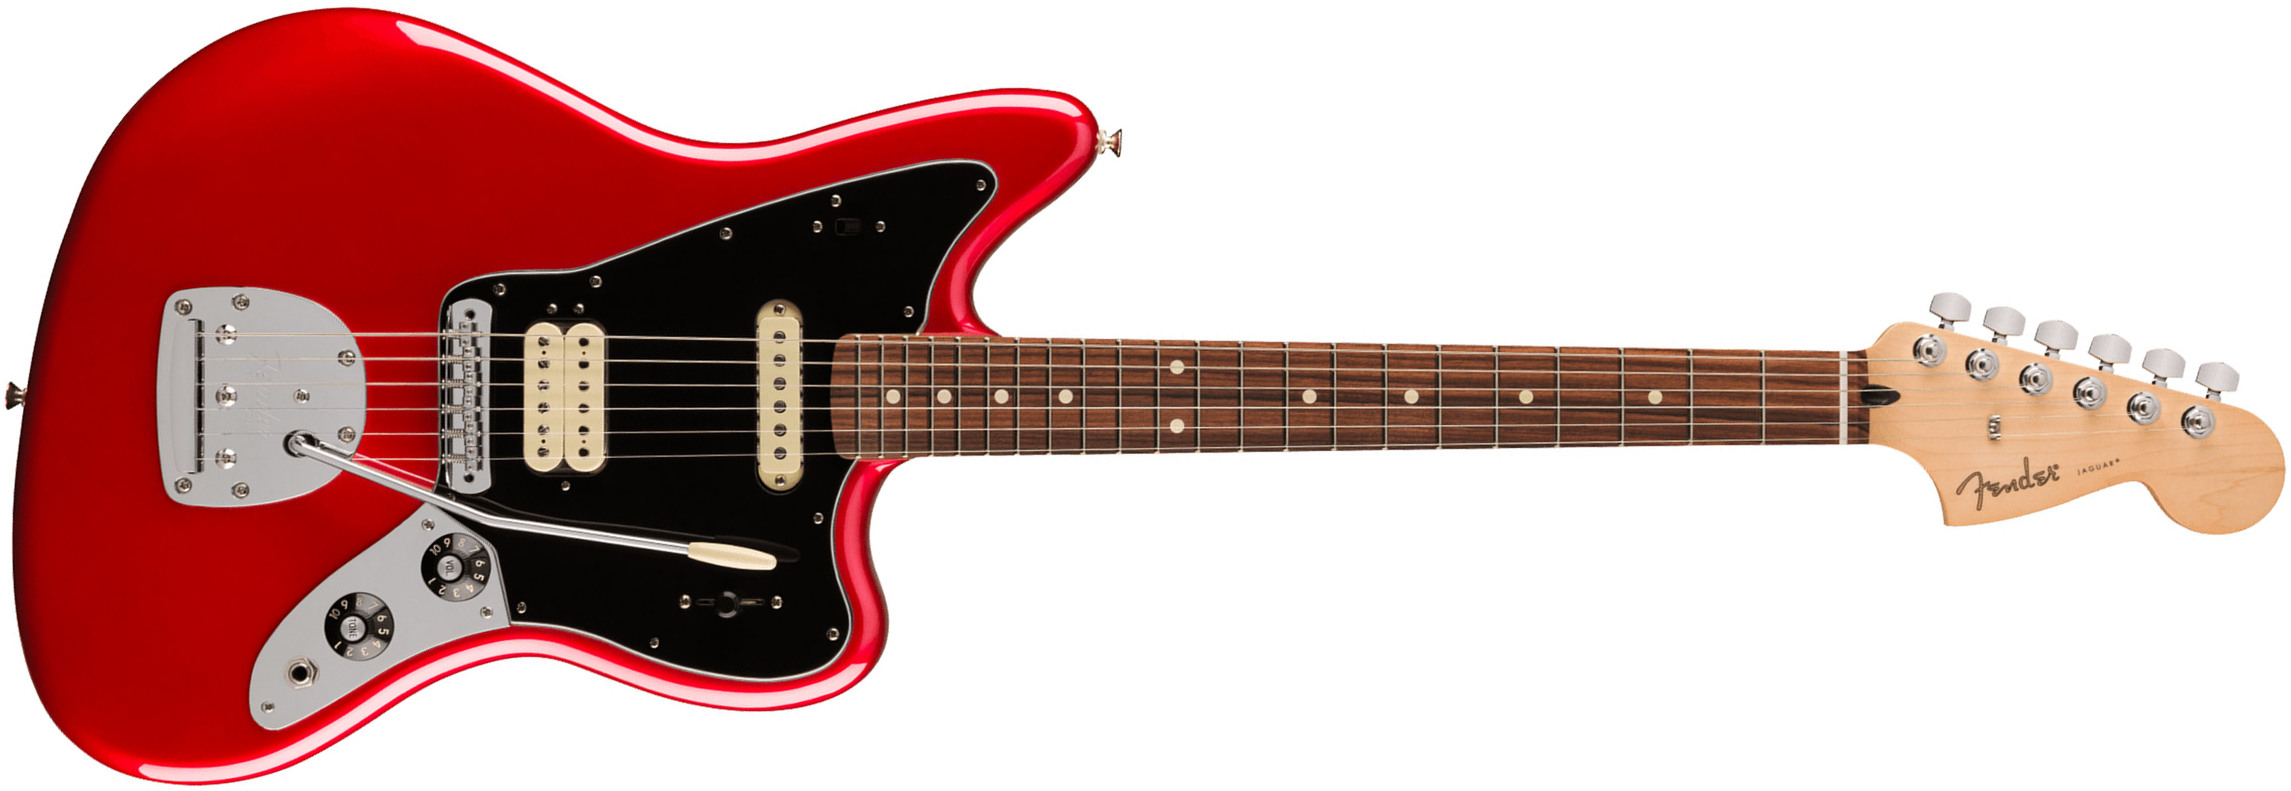 Fender Jaguar Player Mex 2023 Hs Trem Pf - Candy Apple Red - Guitarra electrica retro rock - Main picture